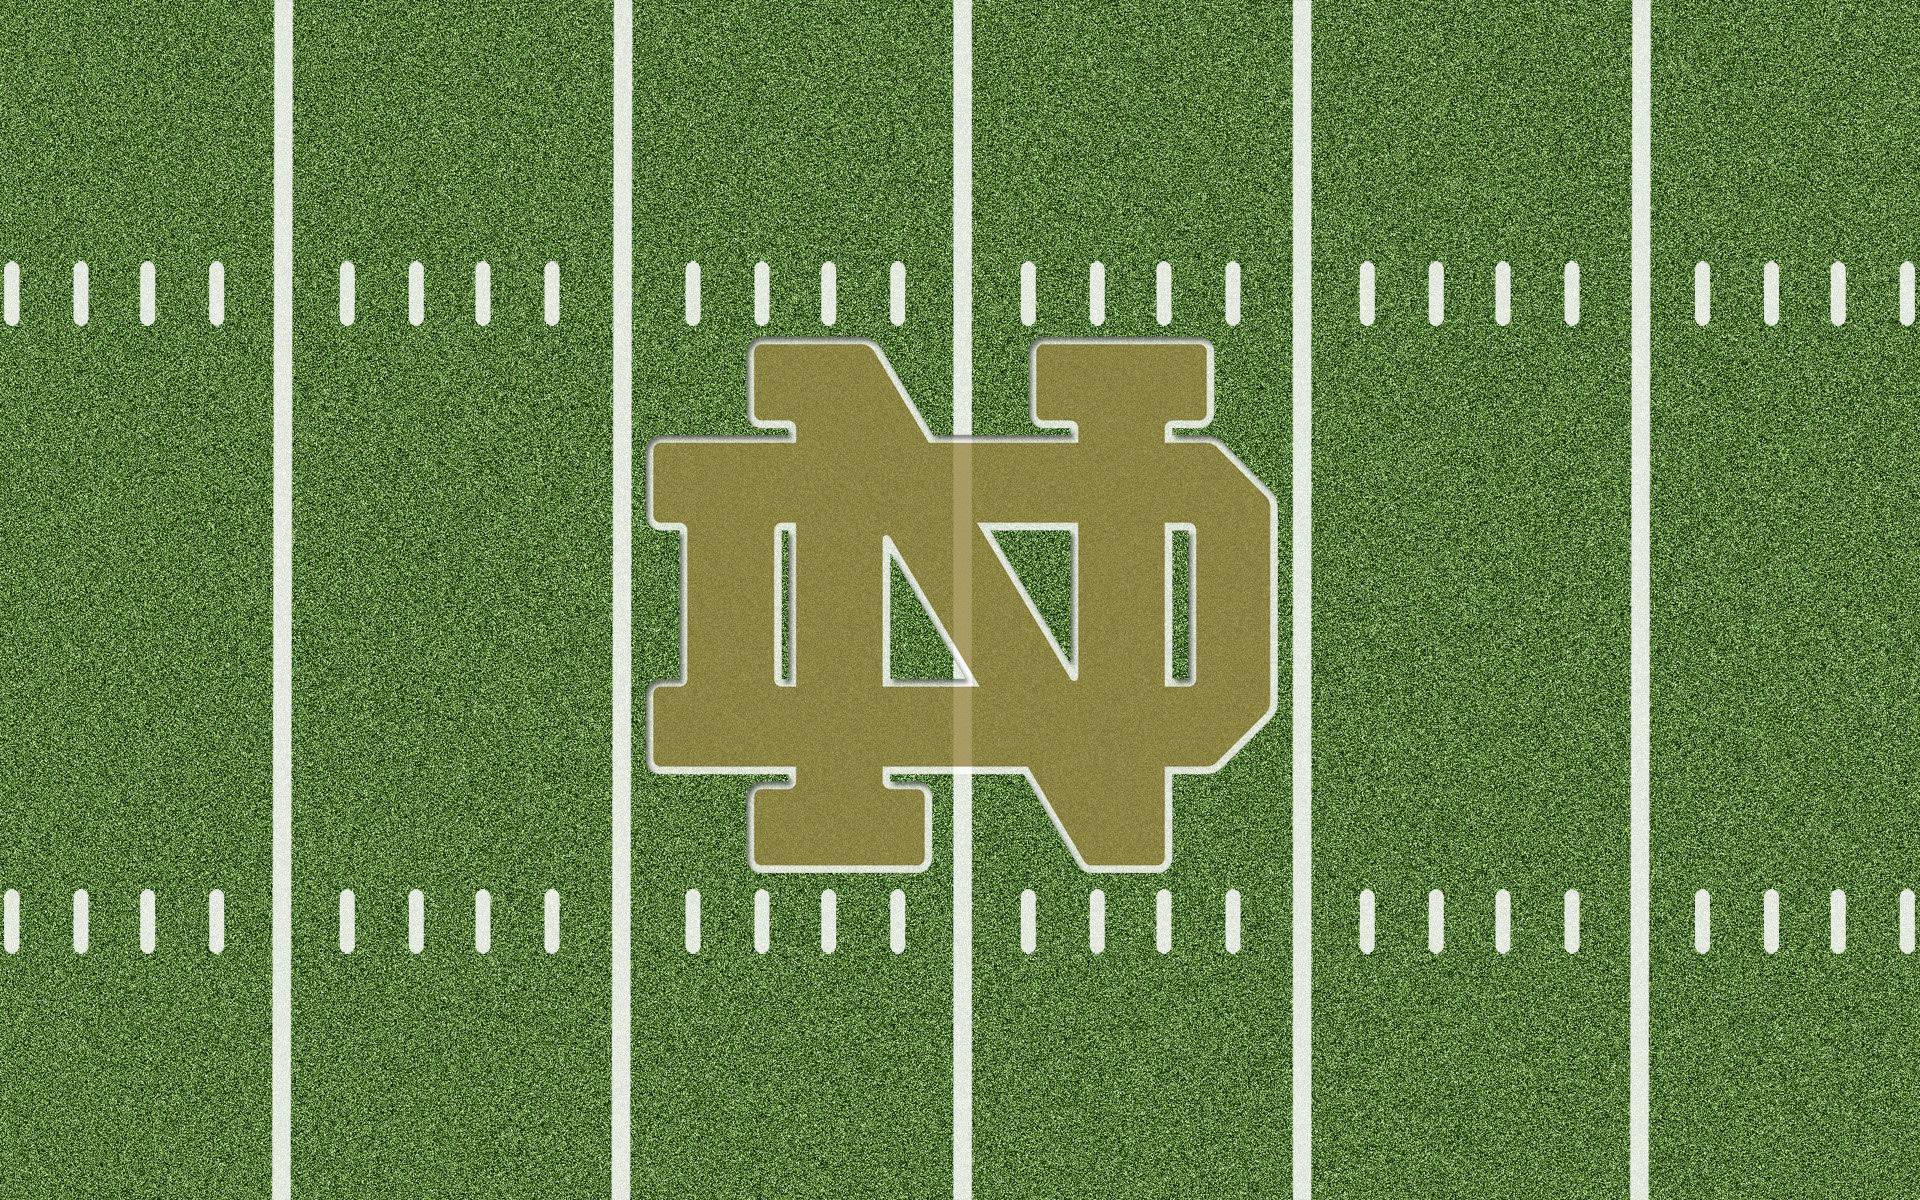 Notre Dame Logo On Football Field